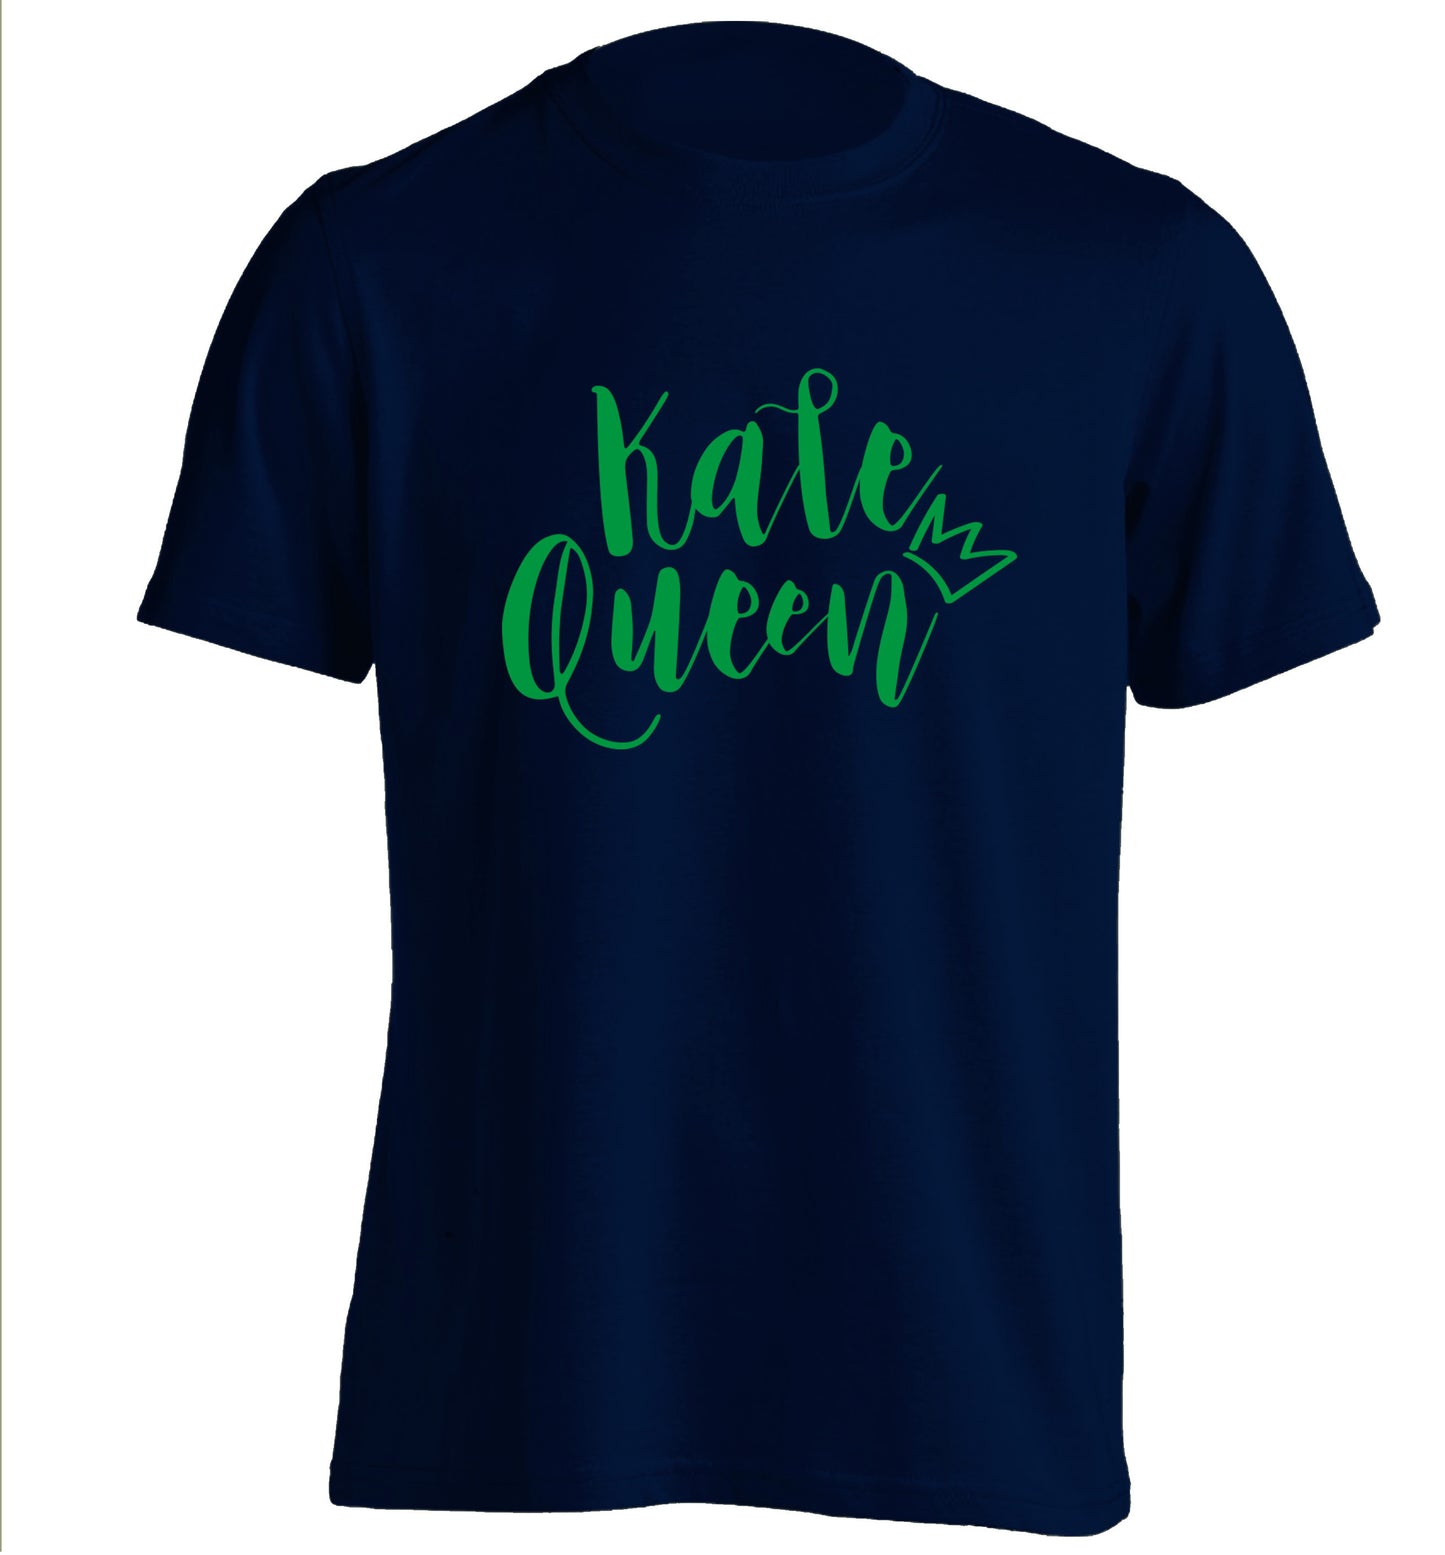 Kale Queen adults unisex navy Tshirt 2XL